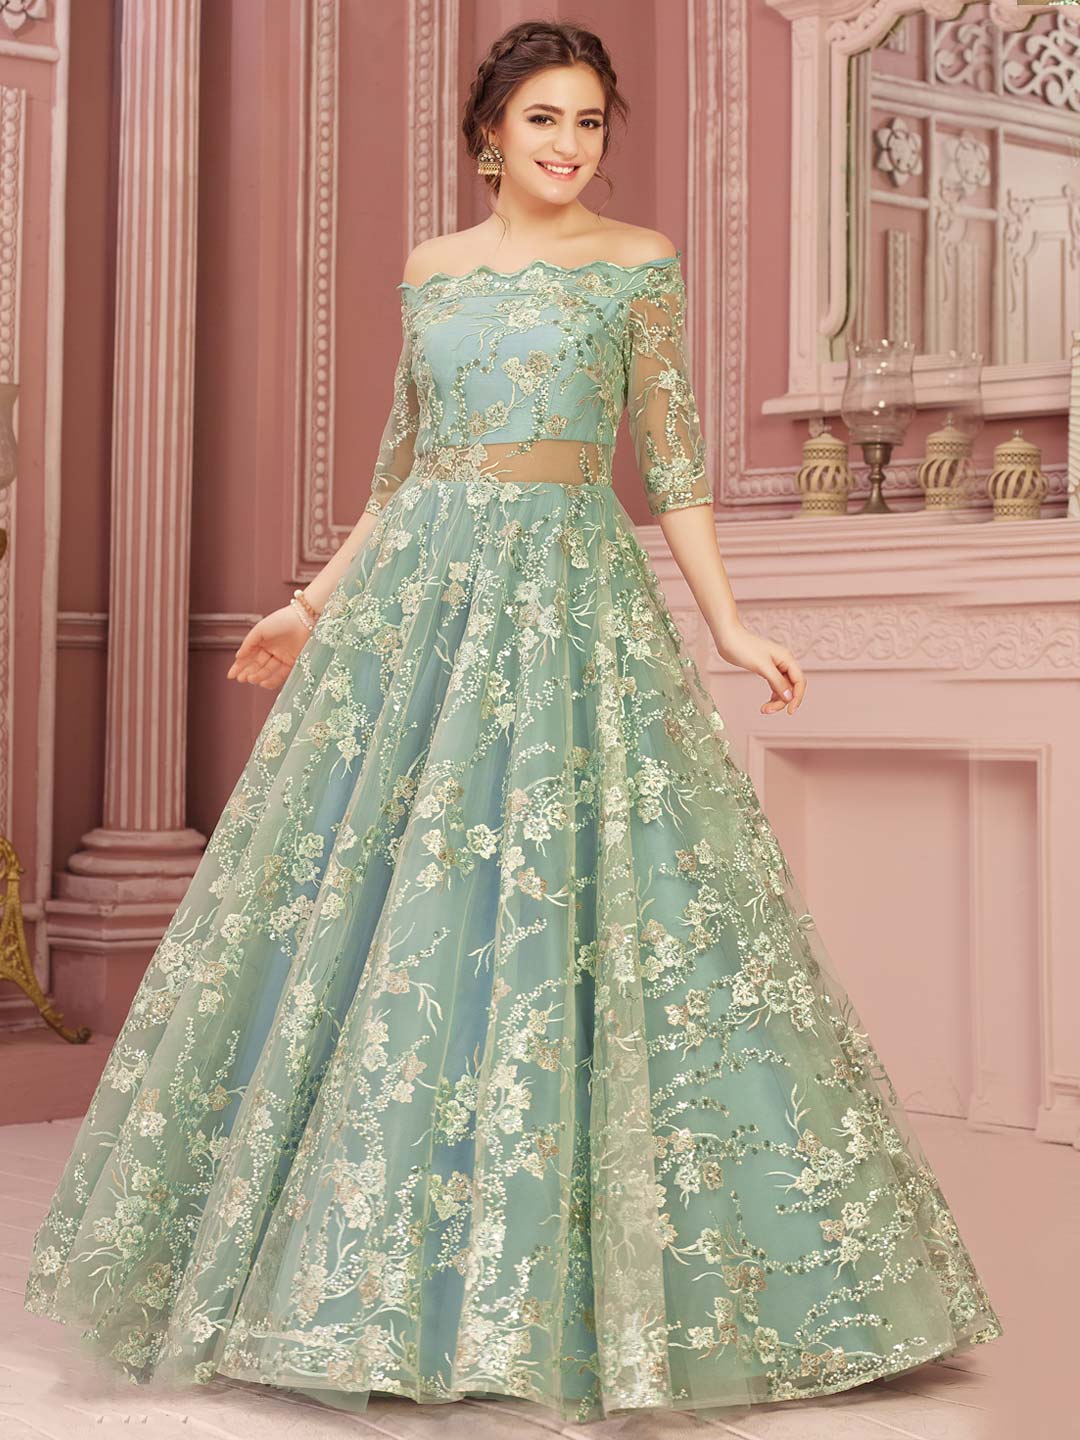 Aqua designer gown for wedding 